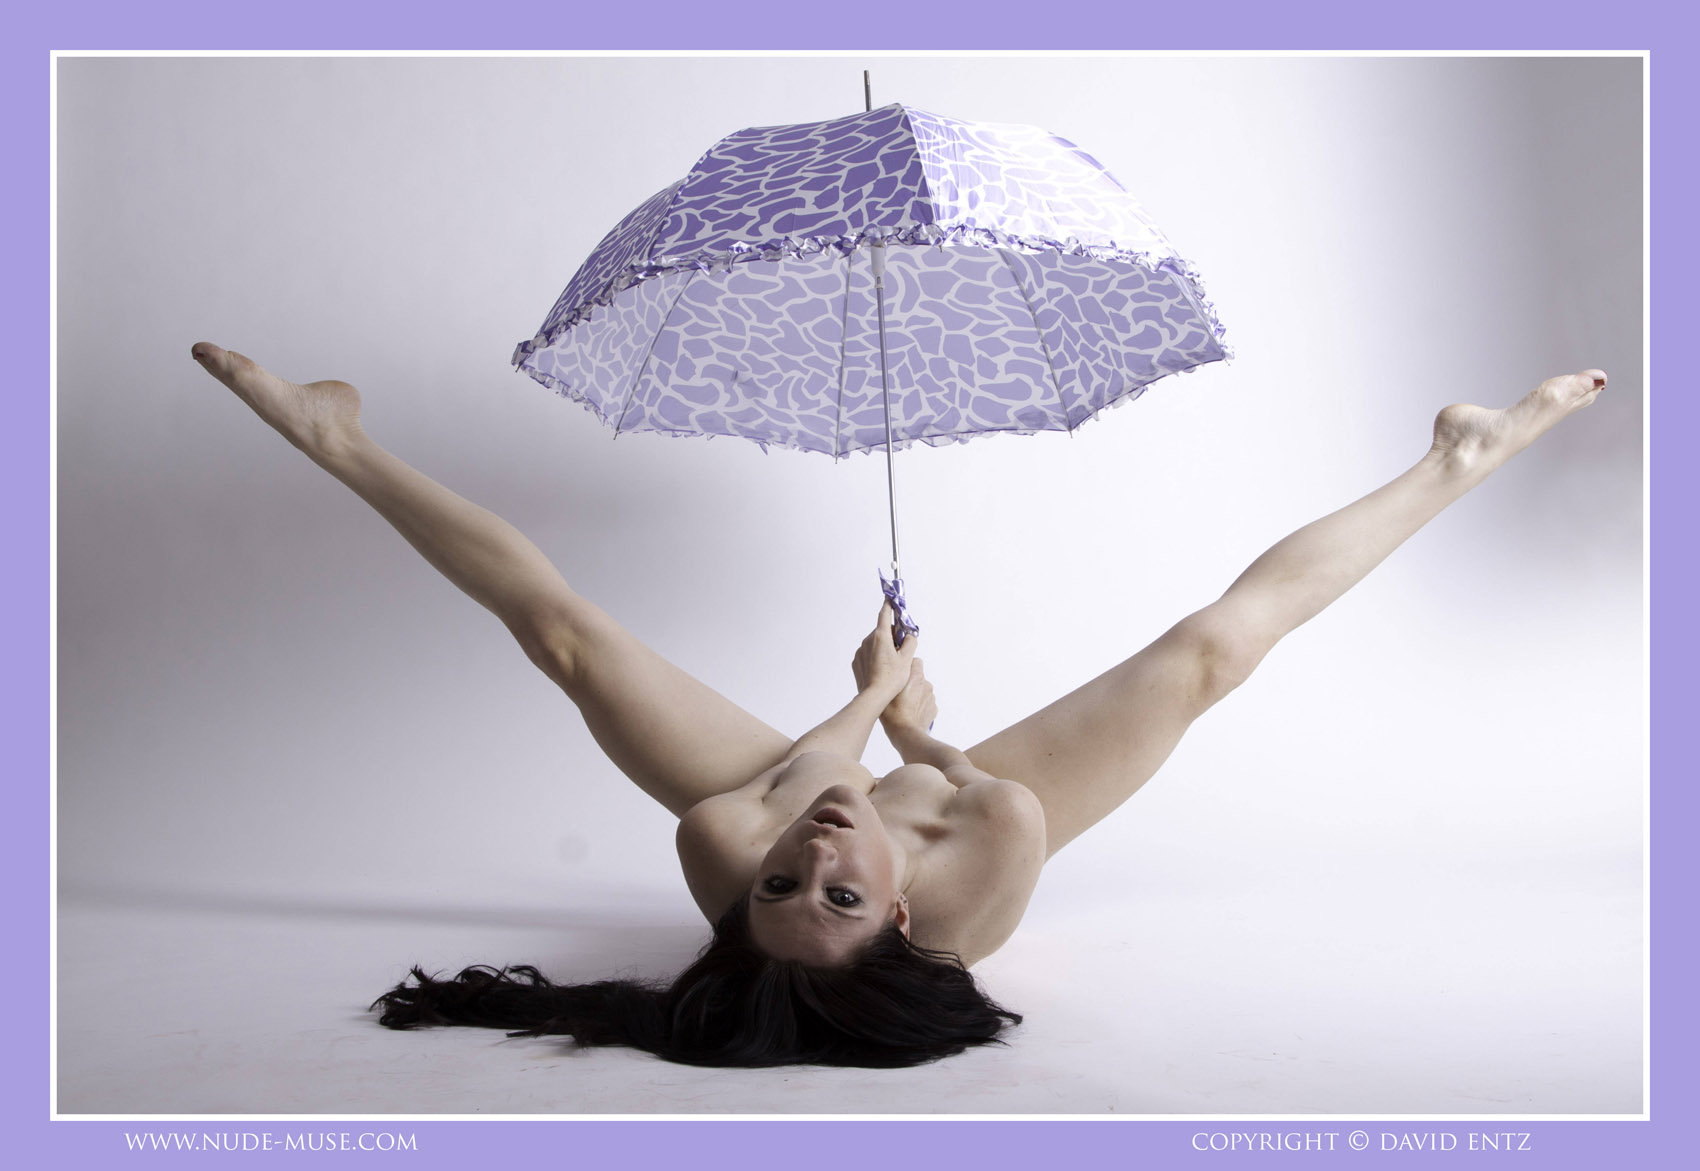 Samantha Bentley Purple Umbrella for Nude Muse